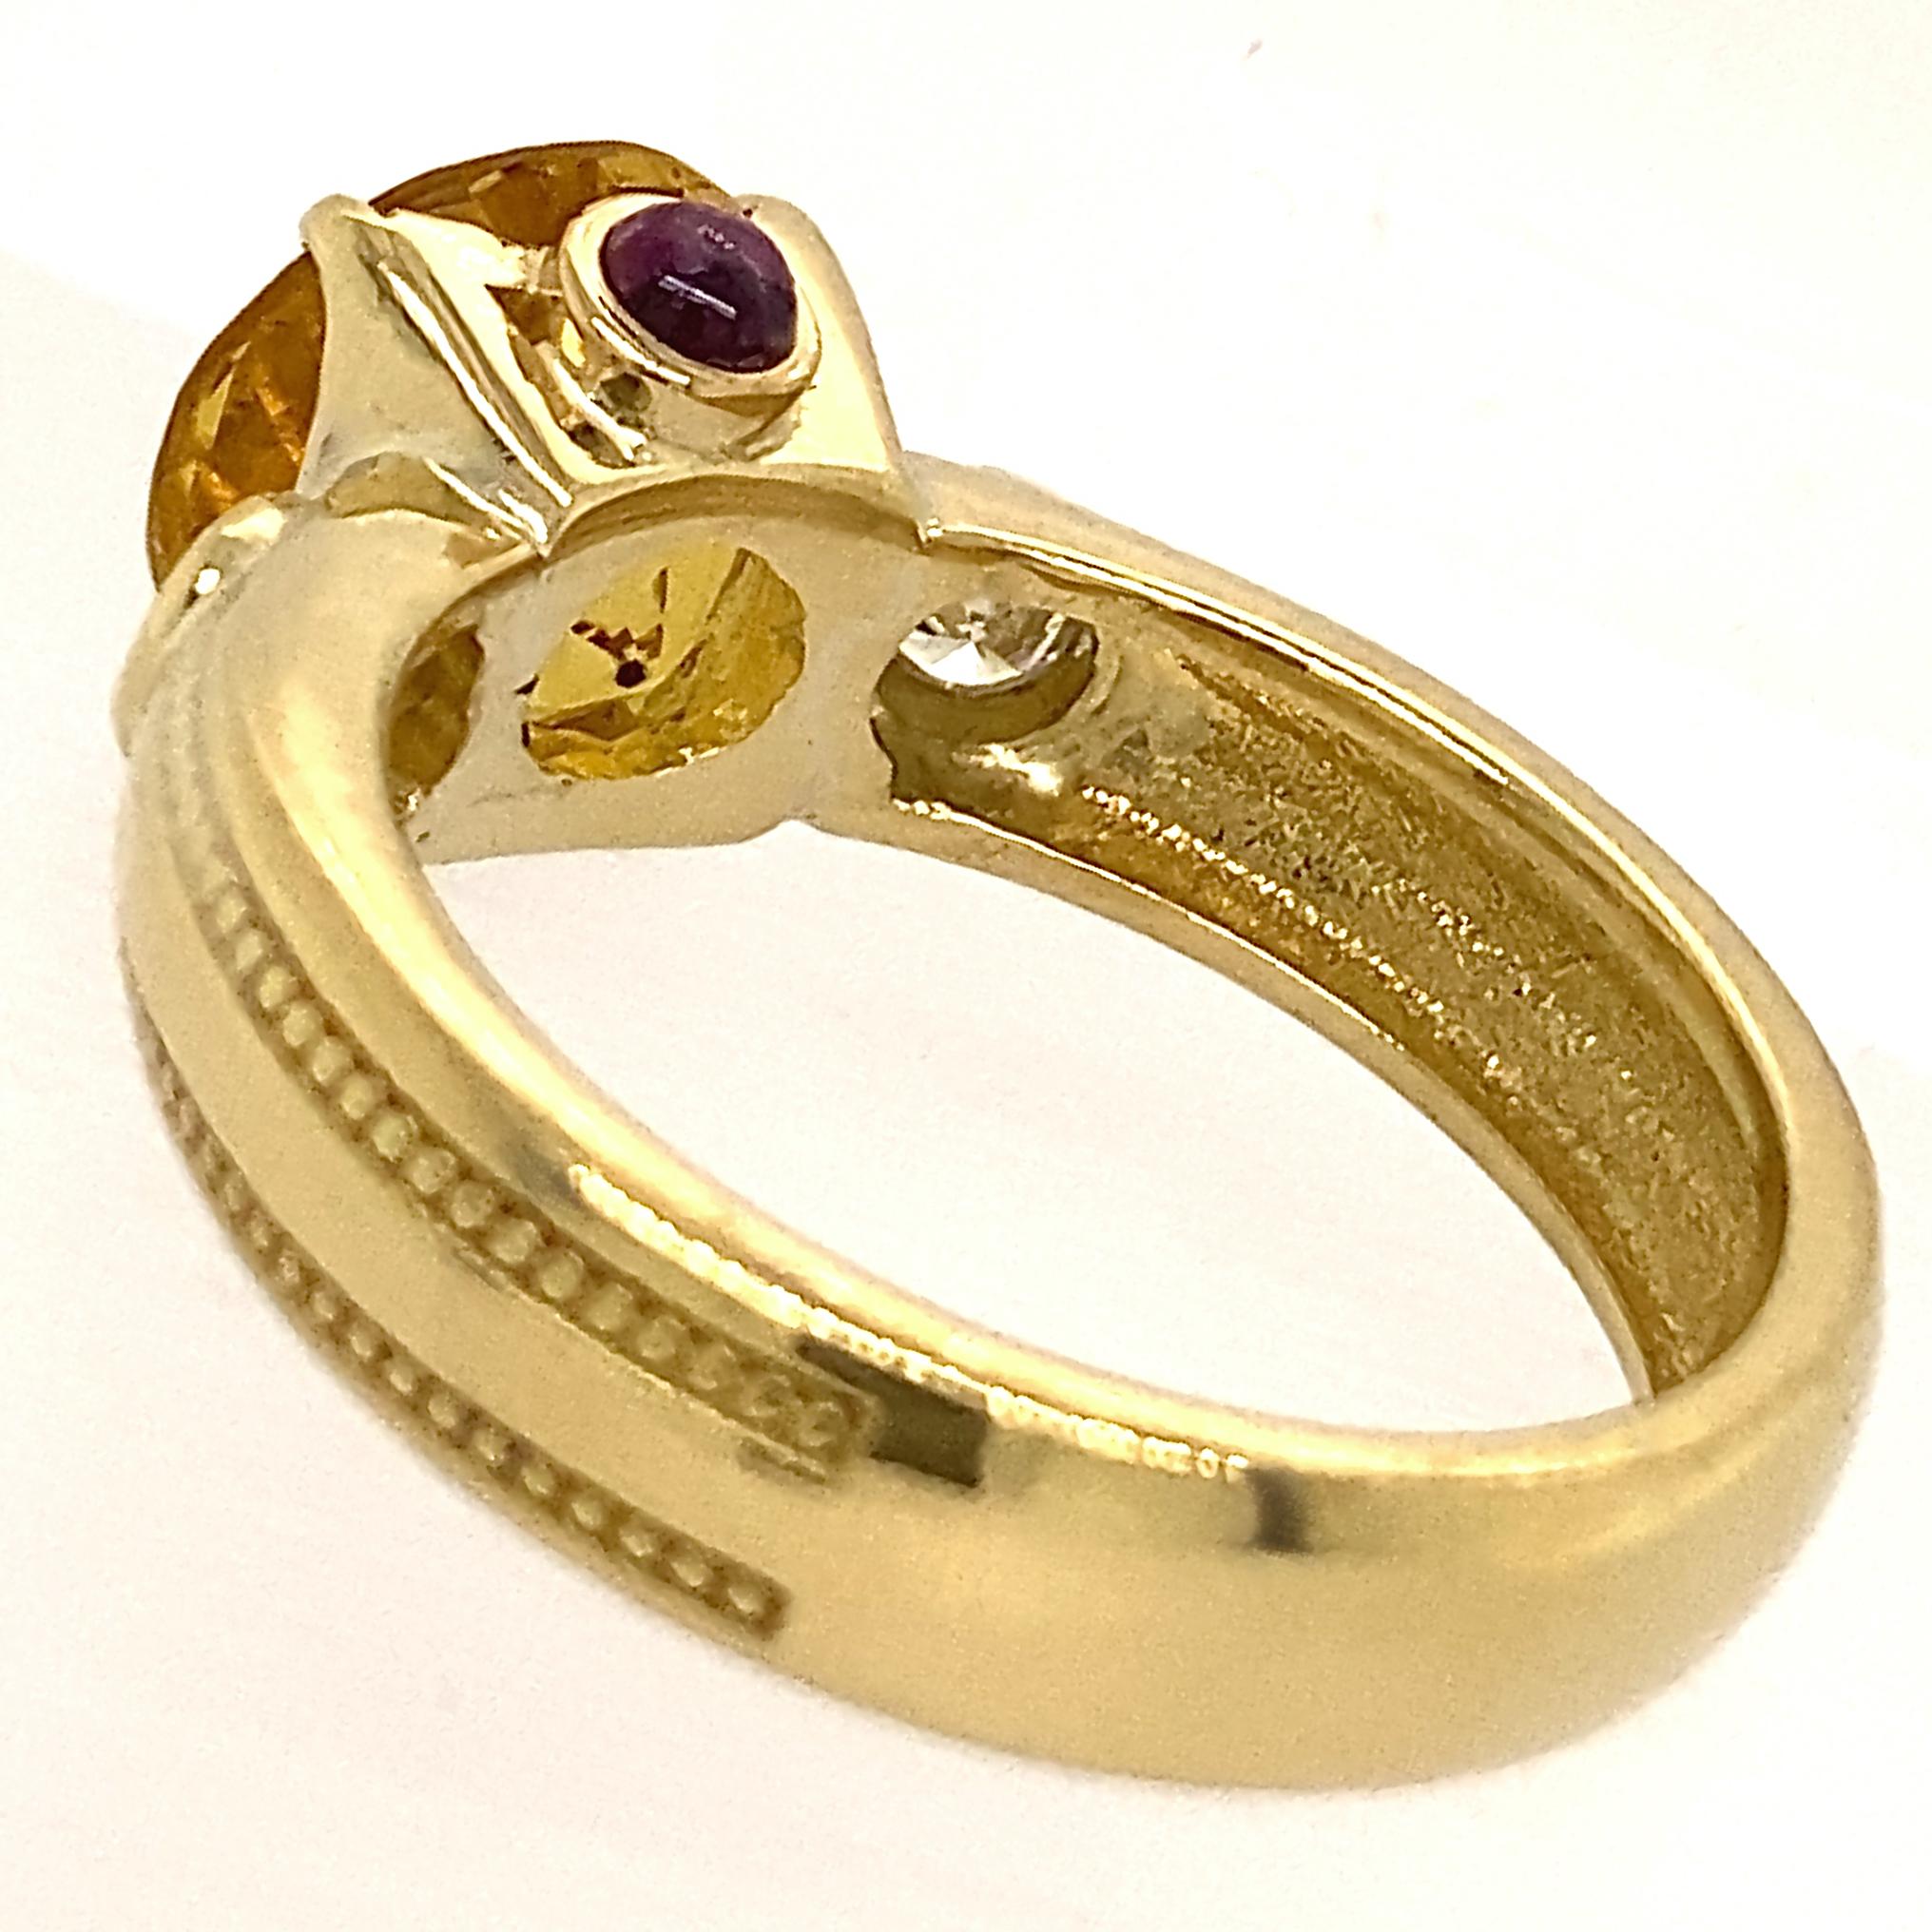 Byzantine-Inspired 18K Gold Ring with Heliodor, Diamonds & Ruby in 18 Karat Gold 4